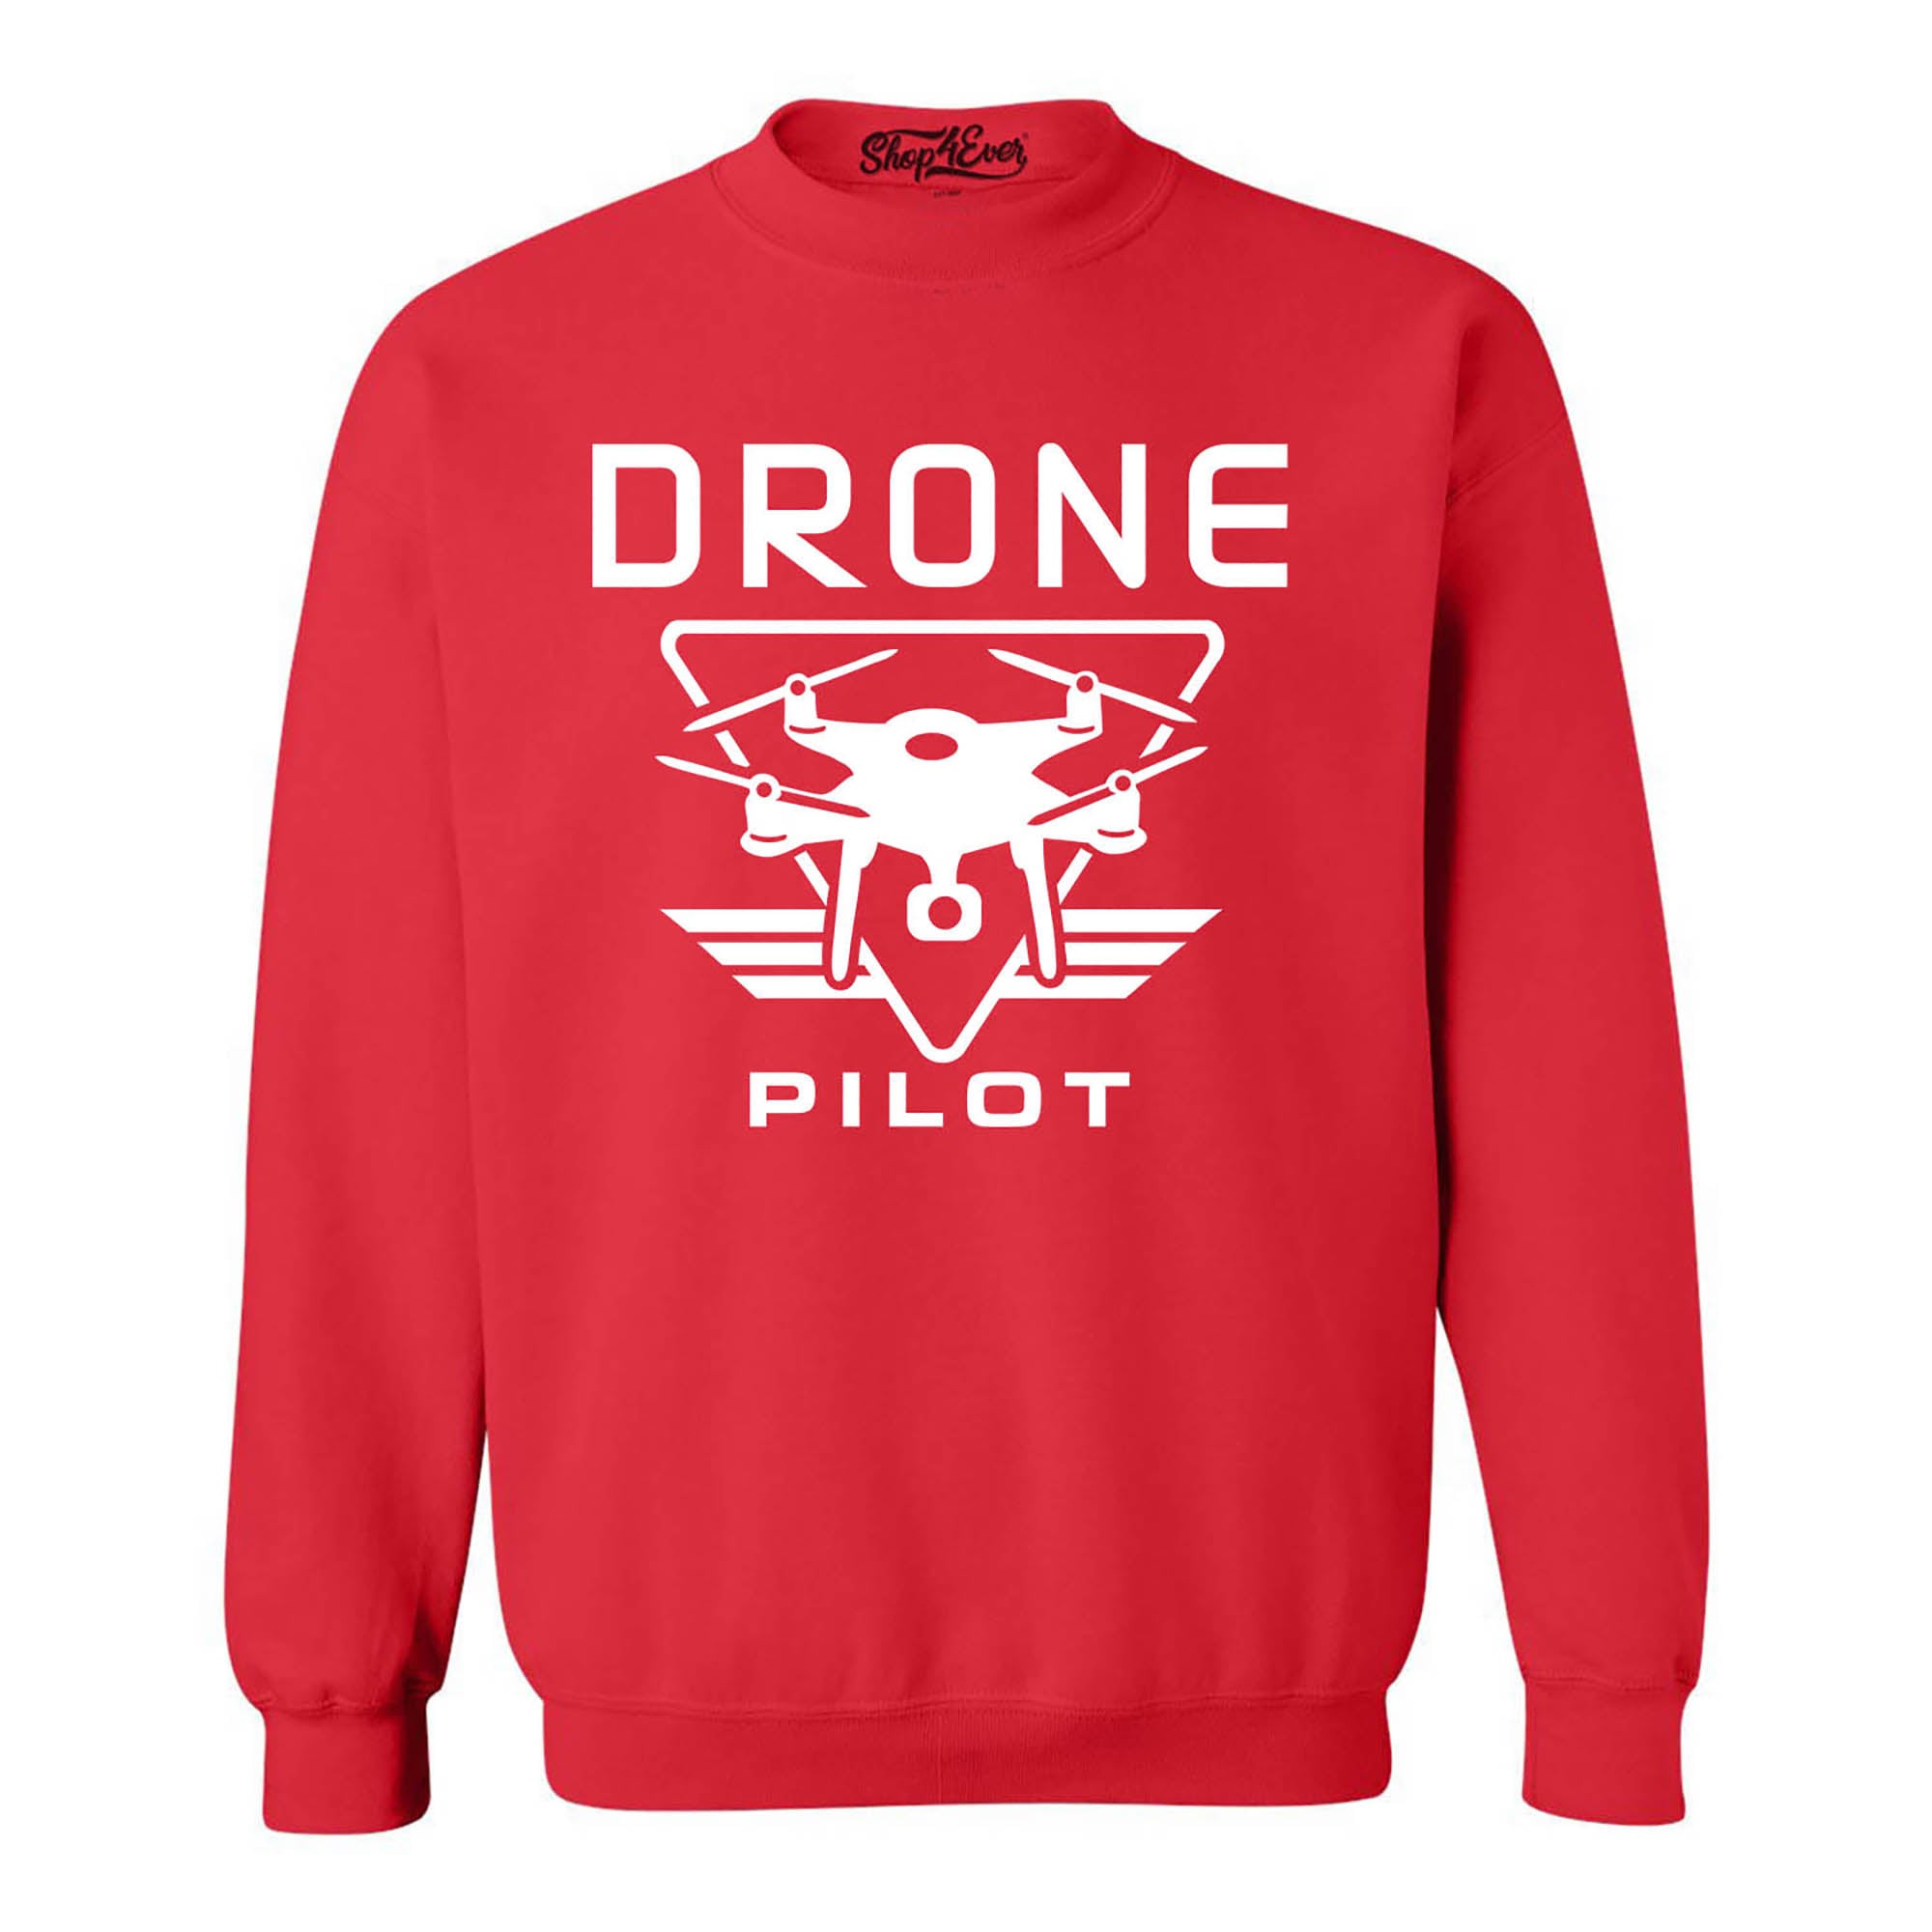 Drone Pilot Crewneck Sweatshirts